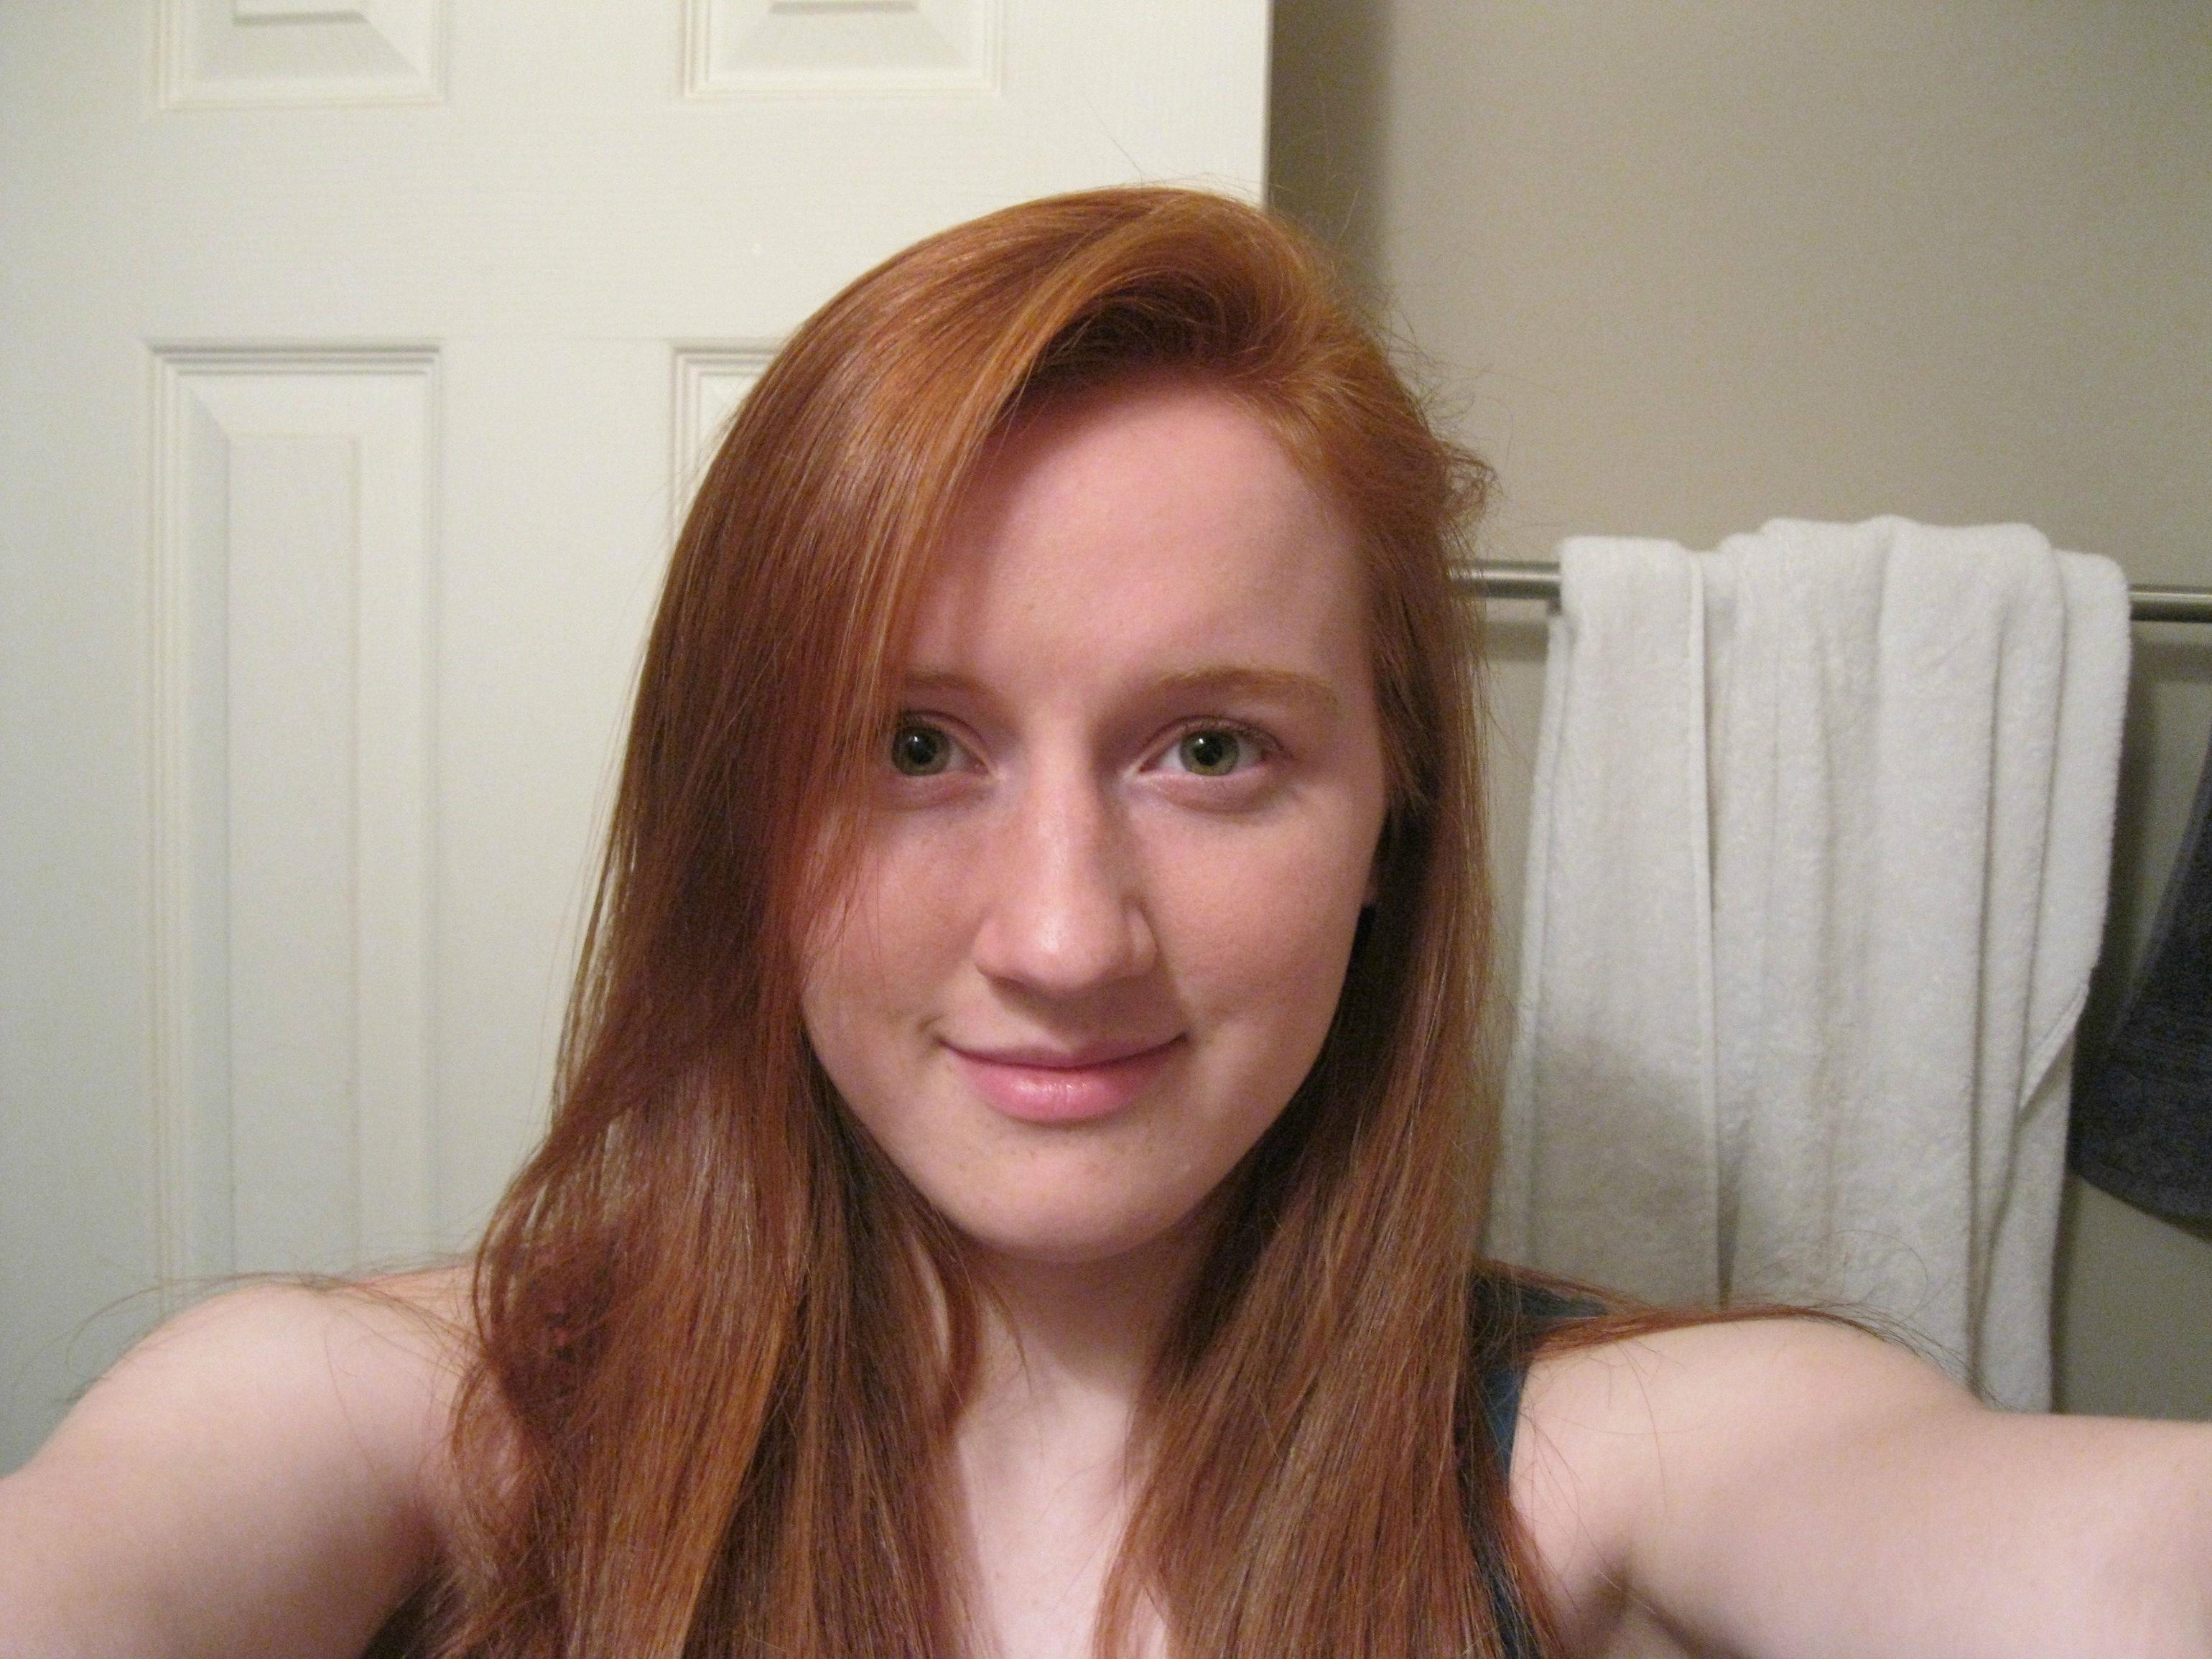 Chubby redhead teen selfie